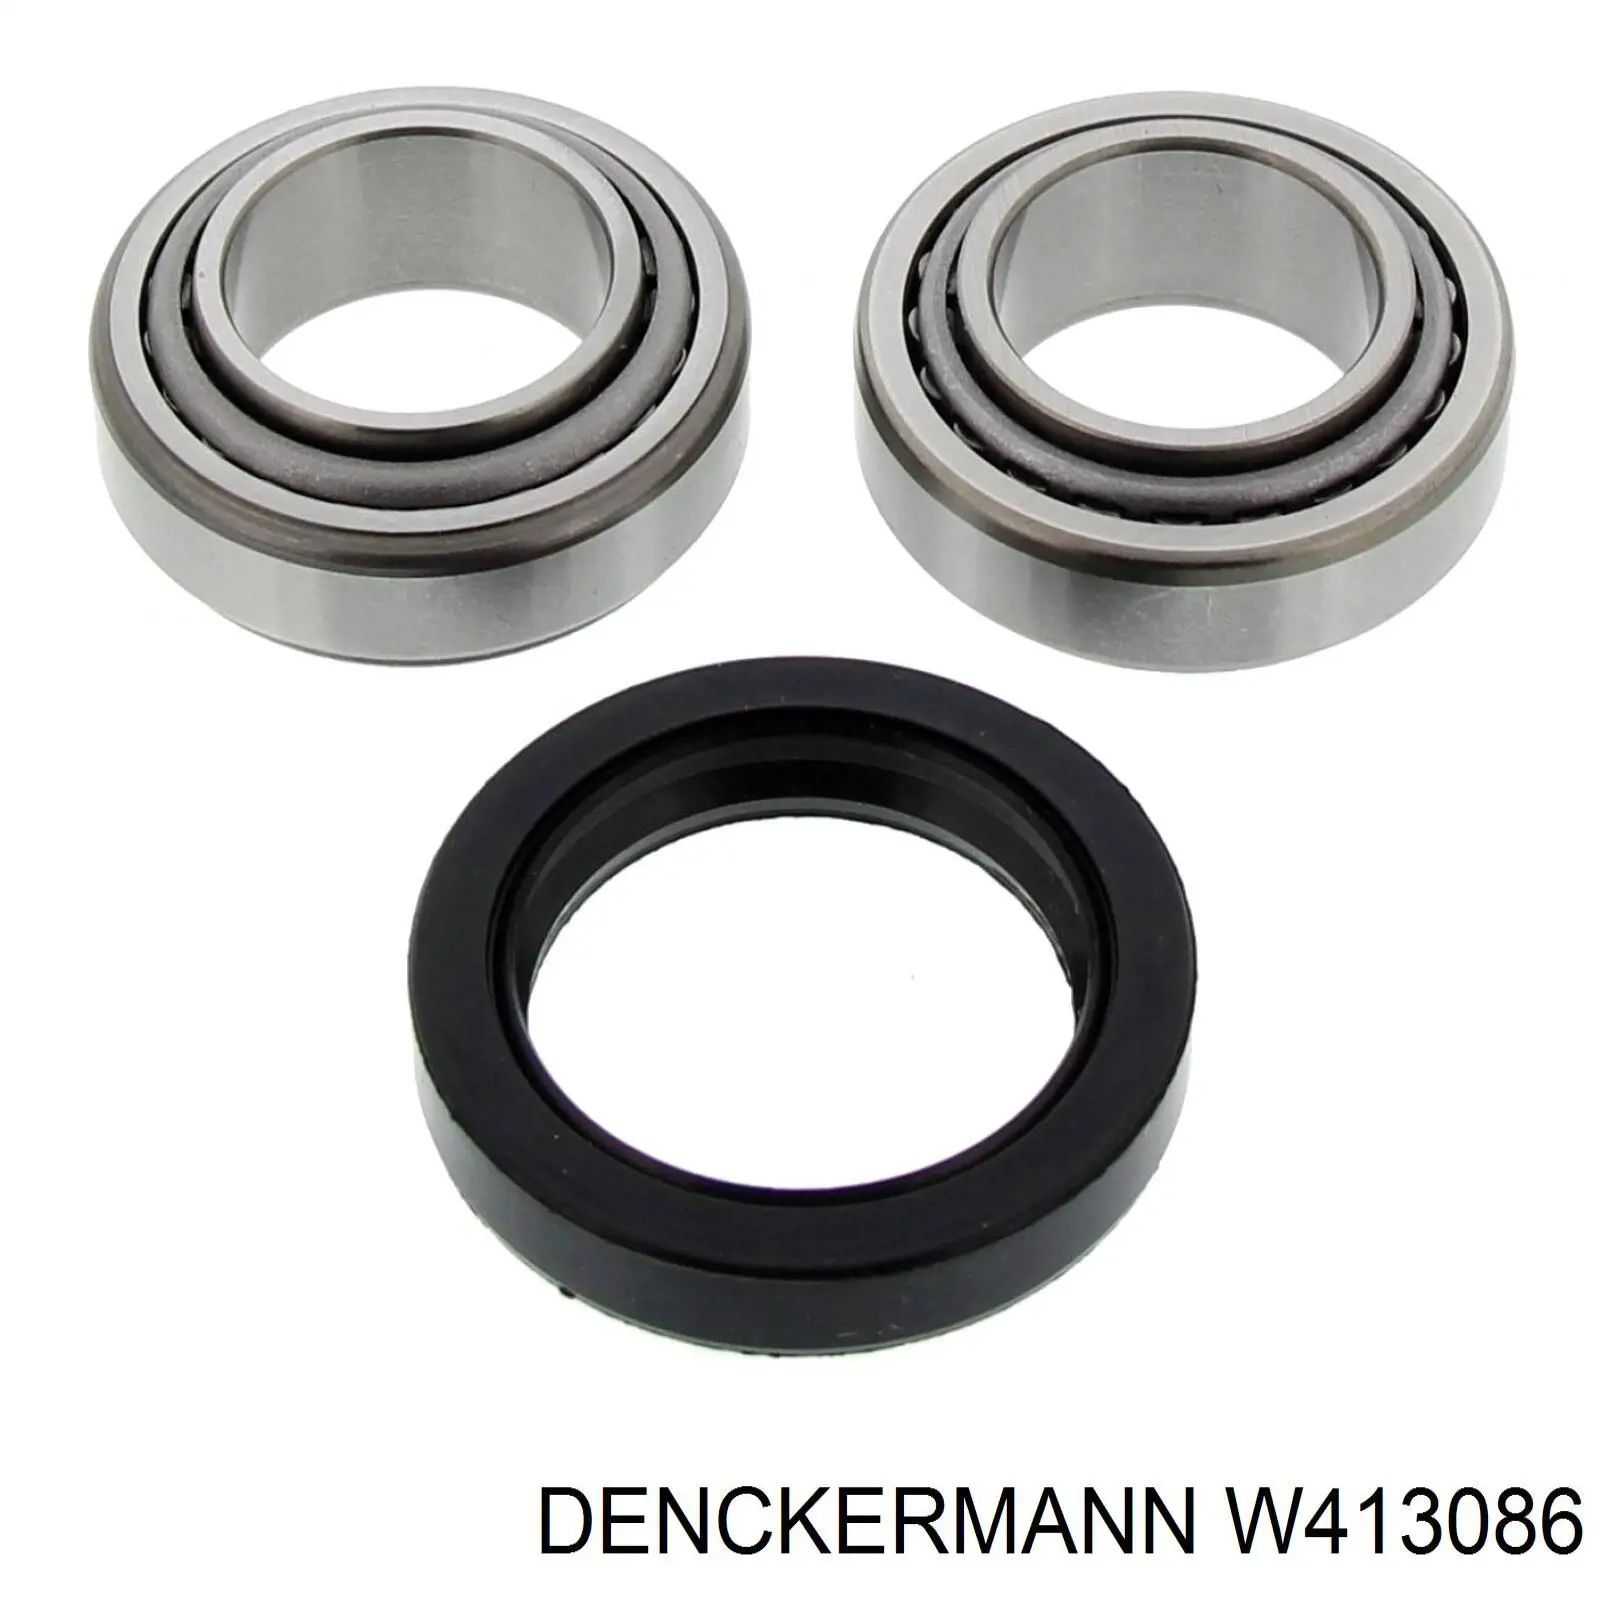 W413086 Denckermann cojinete de rueda trasero